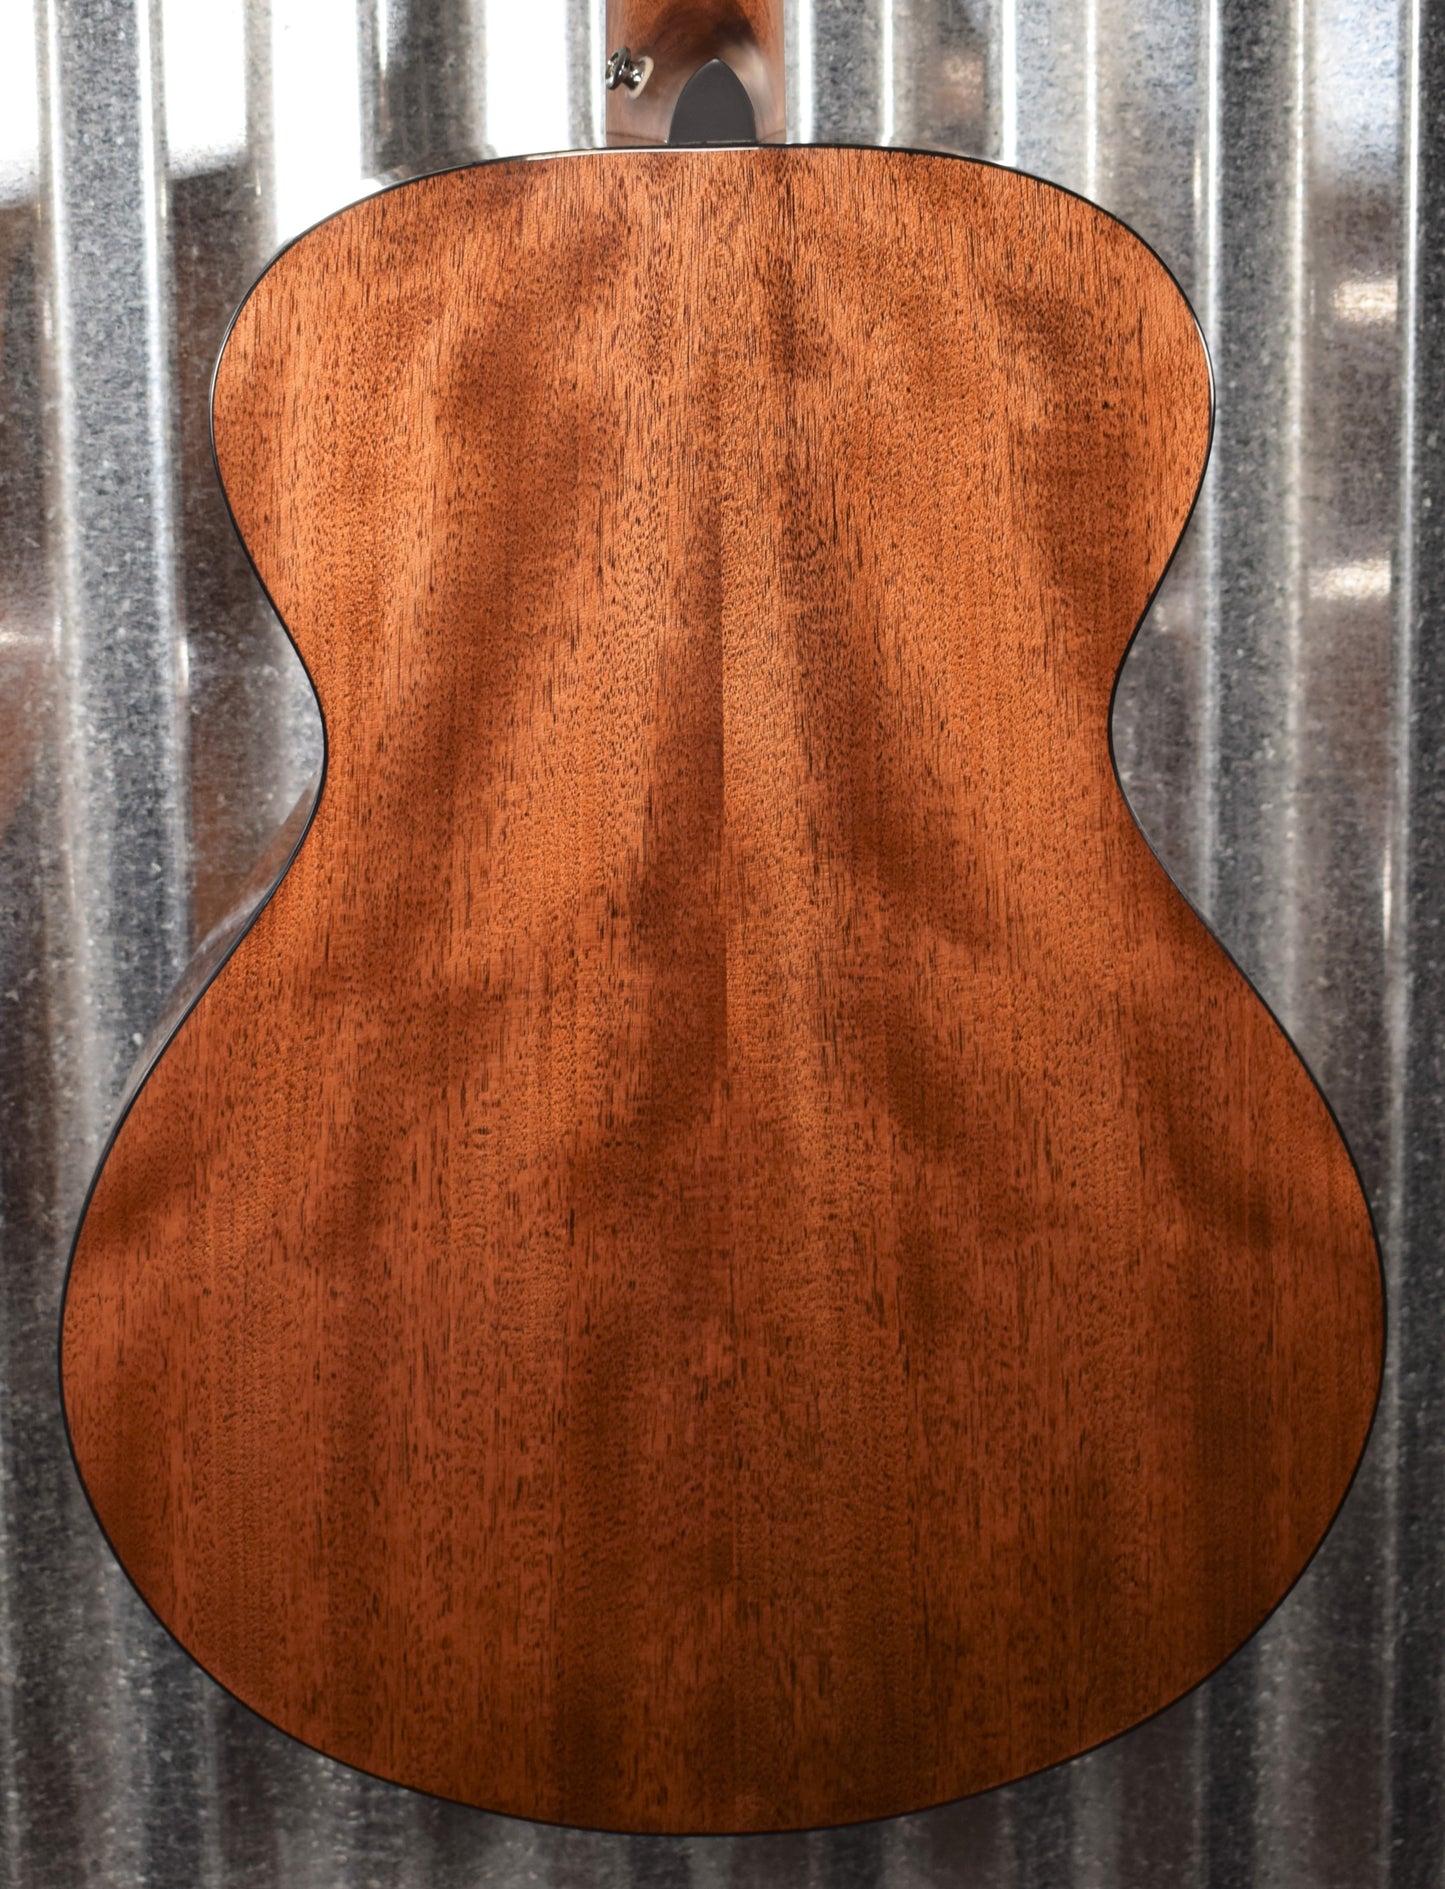 Breedlove Discovery Concert Sunburst Acoustic Guitar & Bag #8958